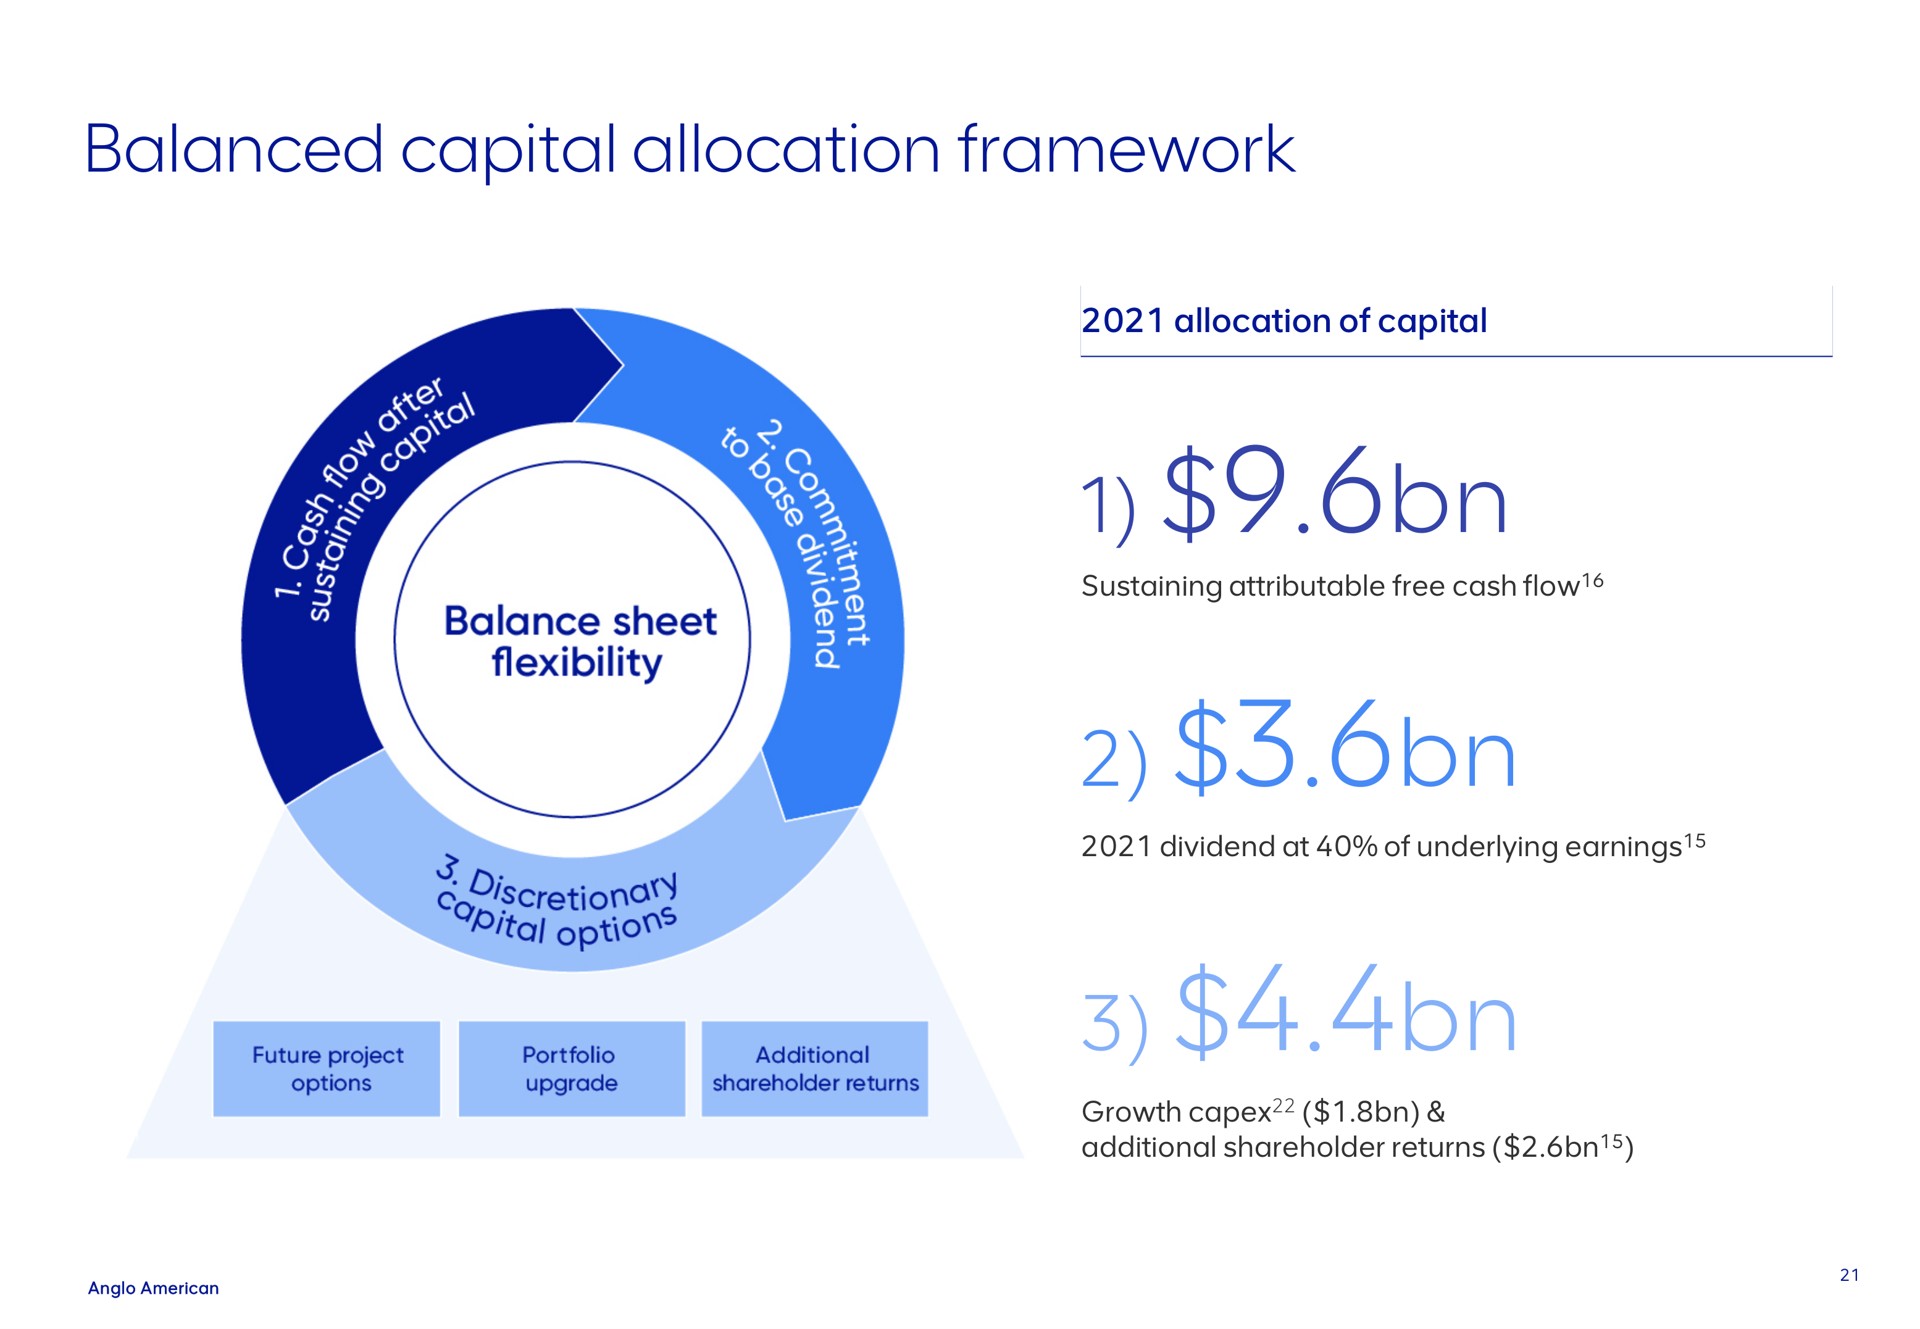 balanced capital allocation framework bon | AngloAmerican